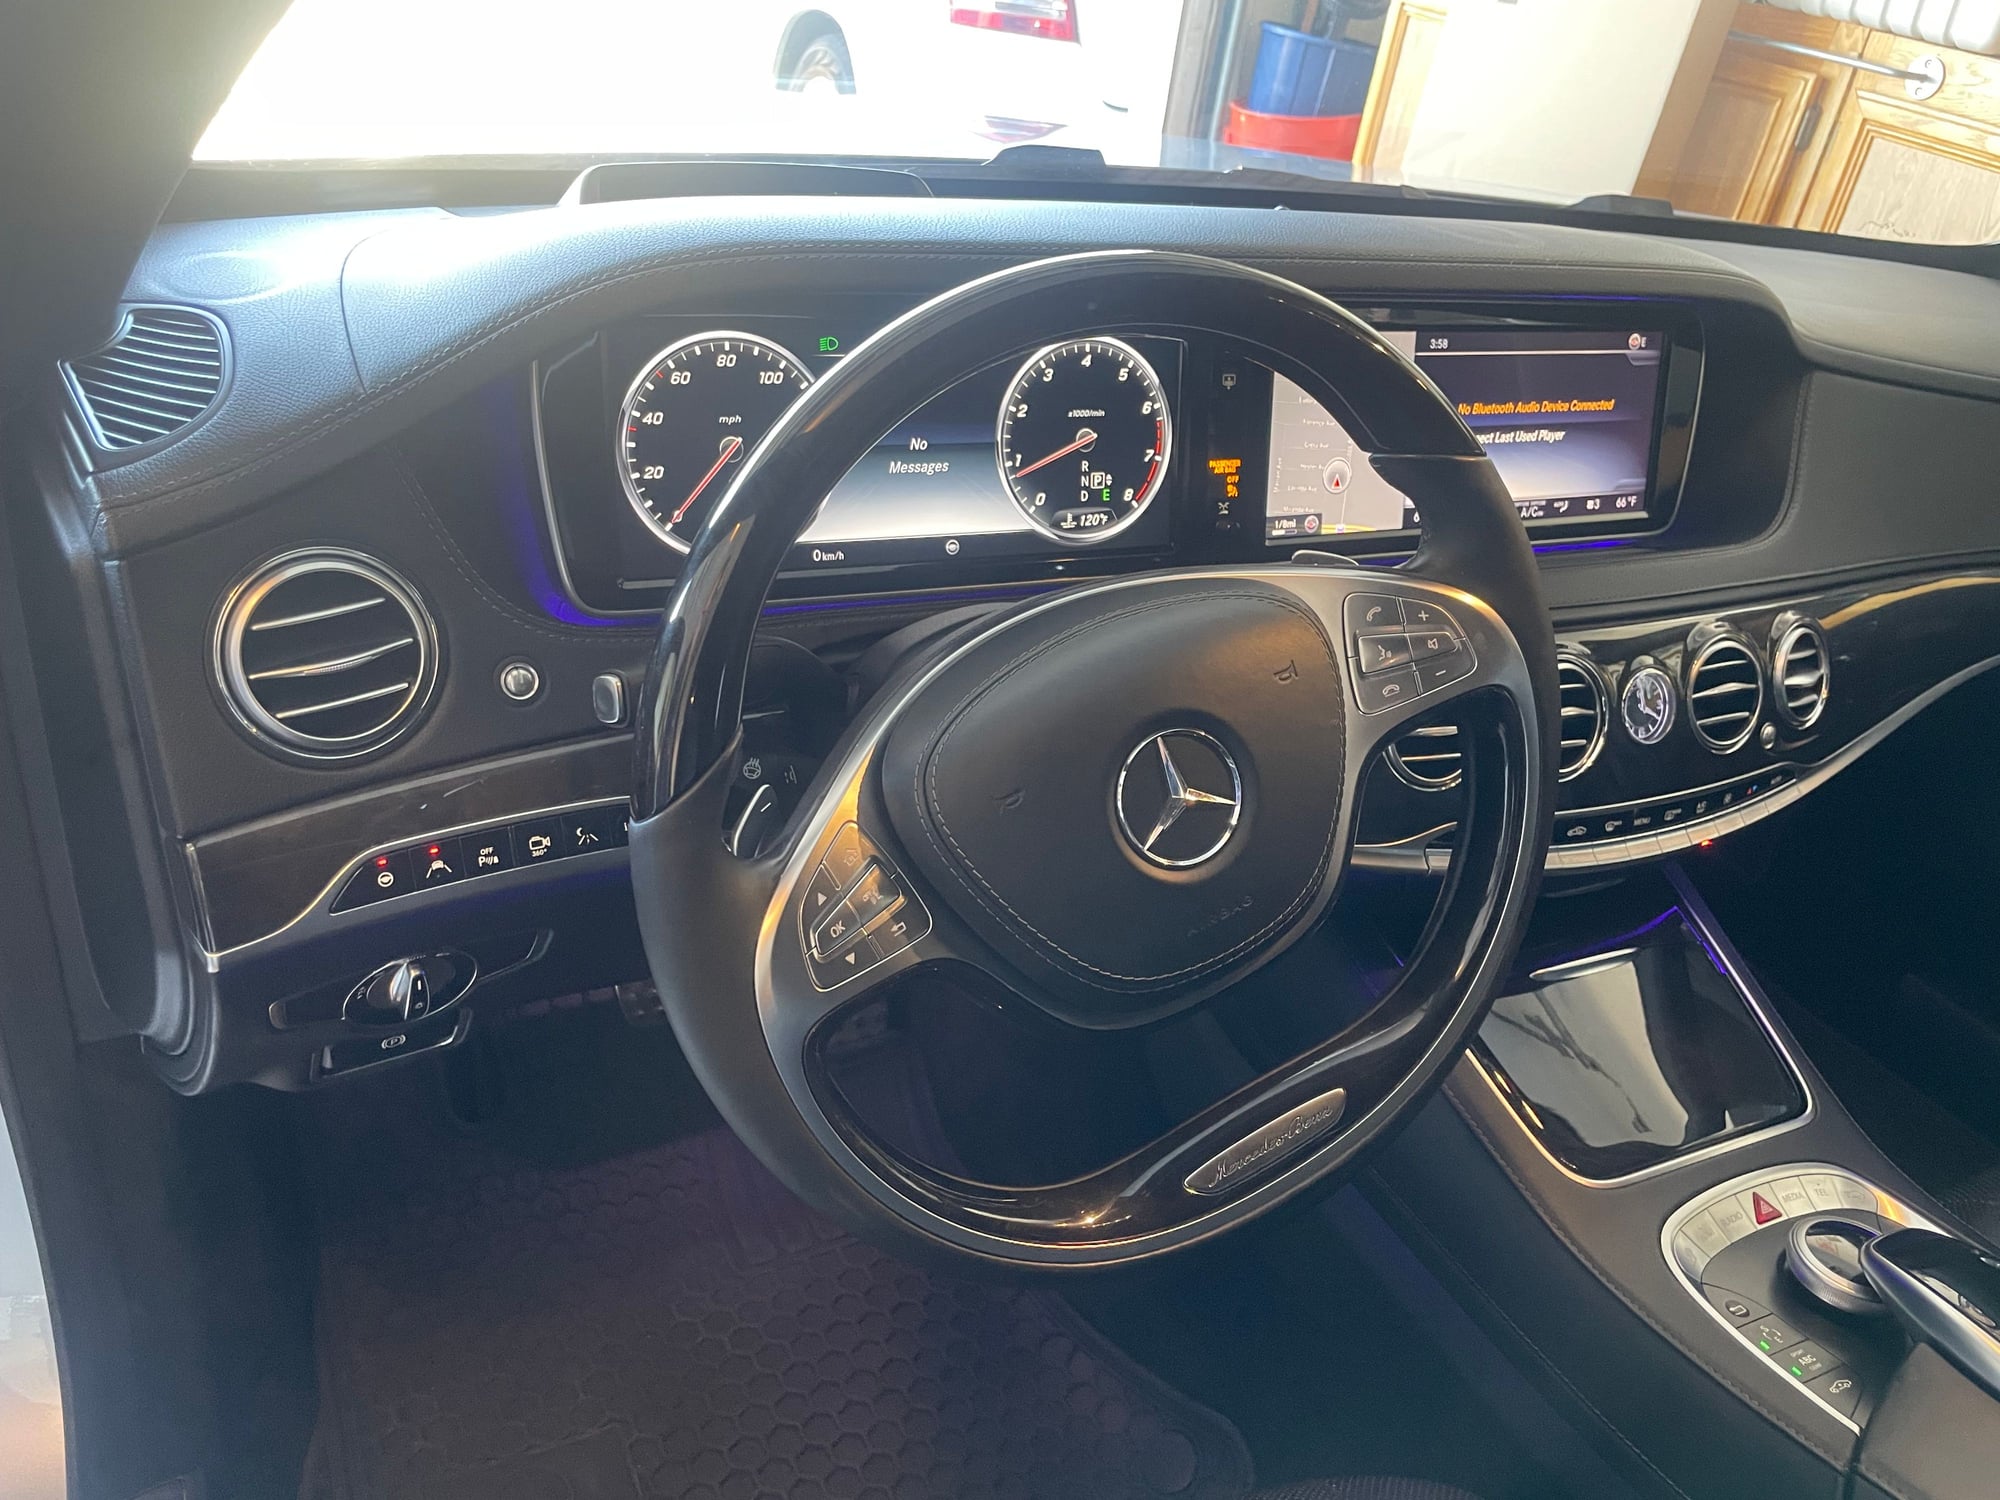 2015 Mercedes-Benz S550 - Feeler sale, pristine w222 s550 - Used - VIN WDDUG8CB5FA121818 - 99,950 Miles - Los Angeles, CA 90013, United States